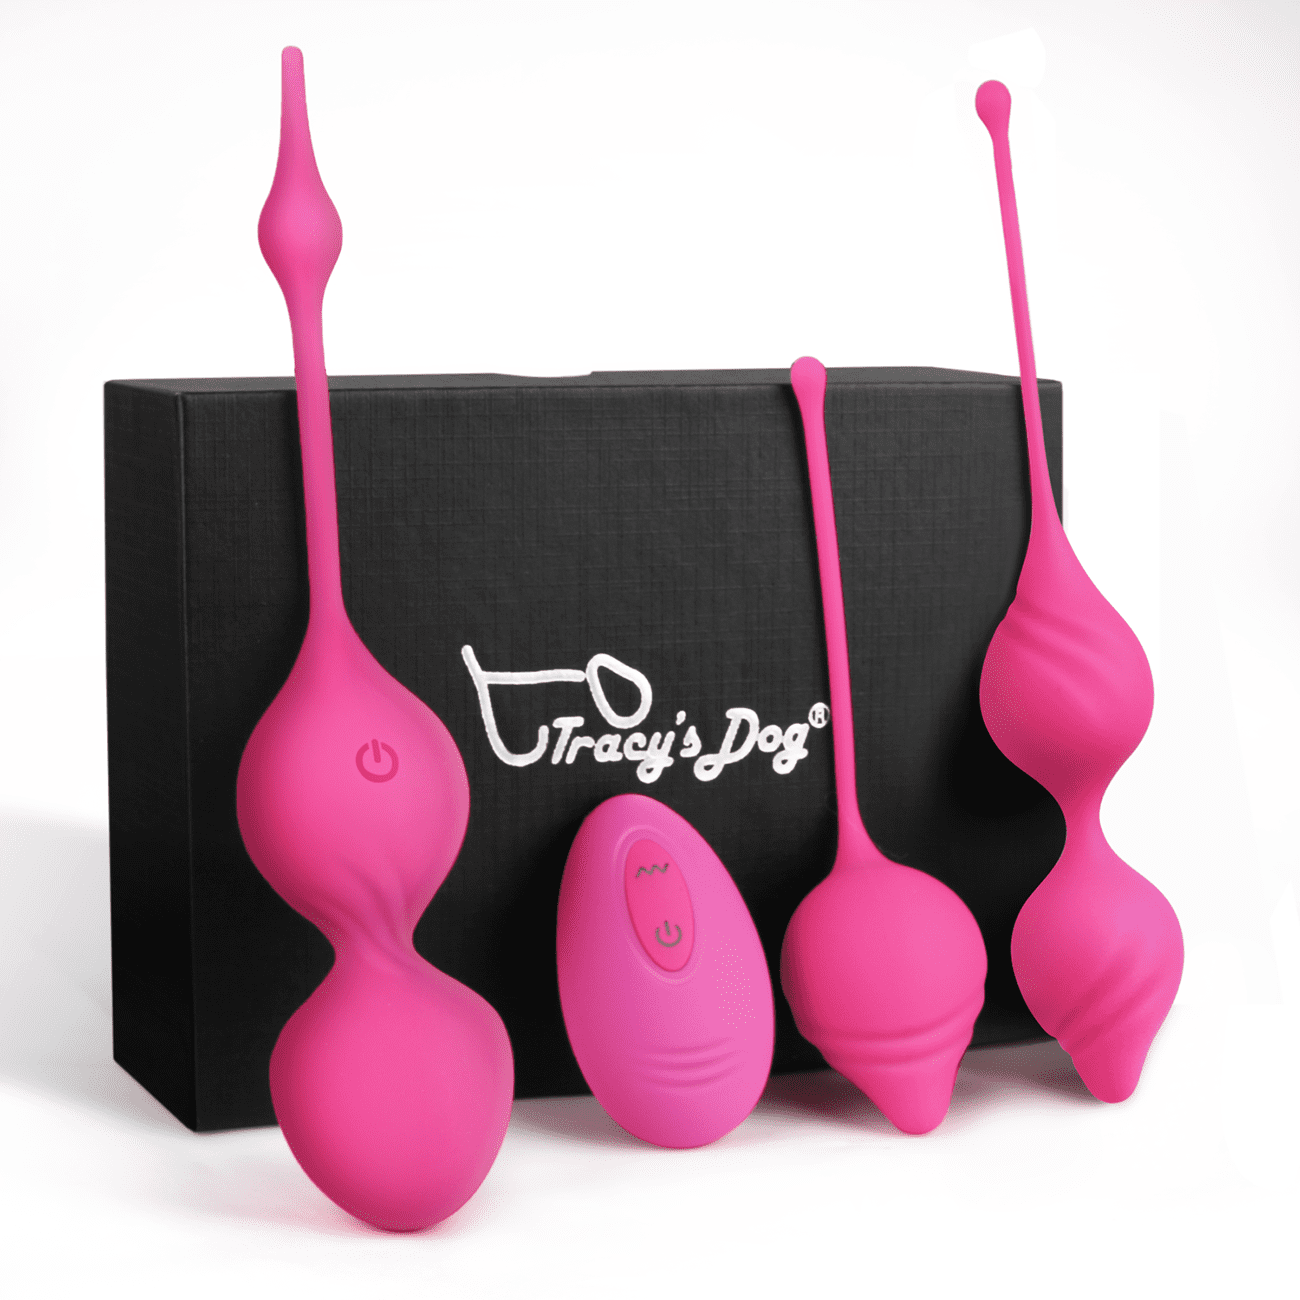 Tracys Dog Kegel Balls for Women, Vibrating Eggs Love Ben Wa Balls Adult Sex Toys Bullet Vibrator with 10 Vibration for G-Spot Stimulation, Set of 3 